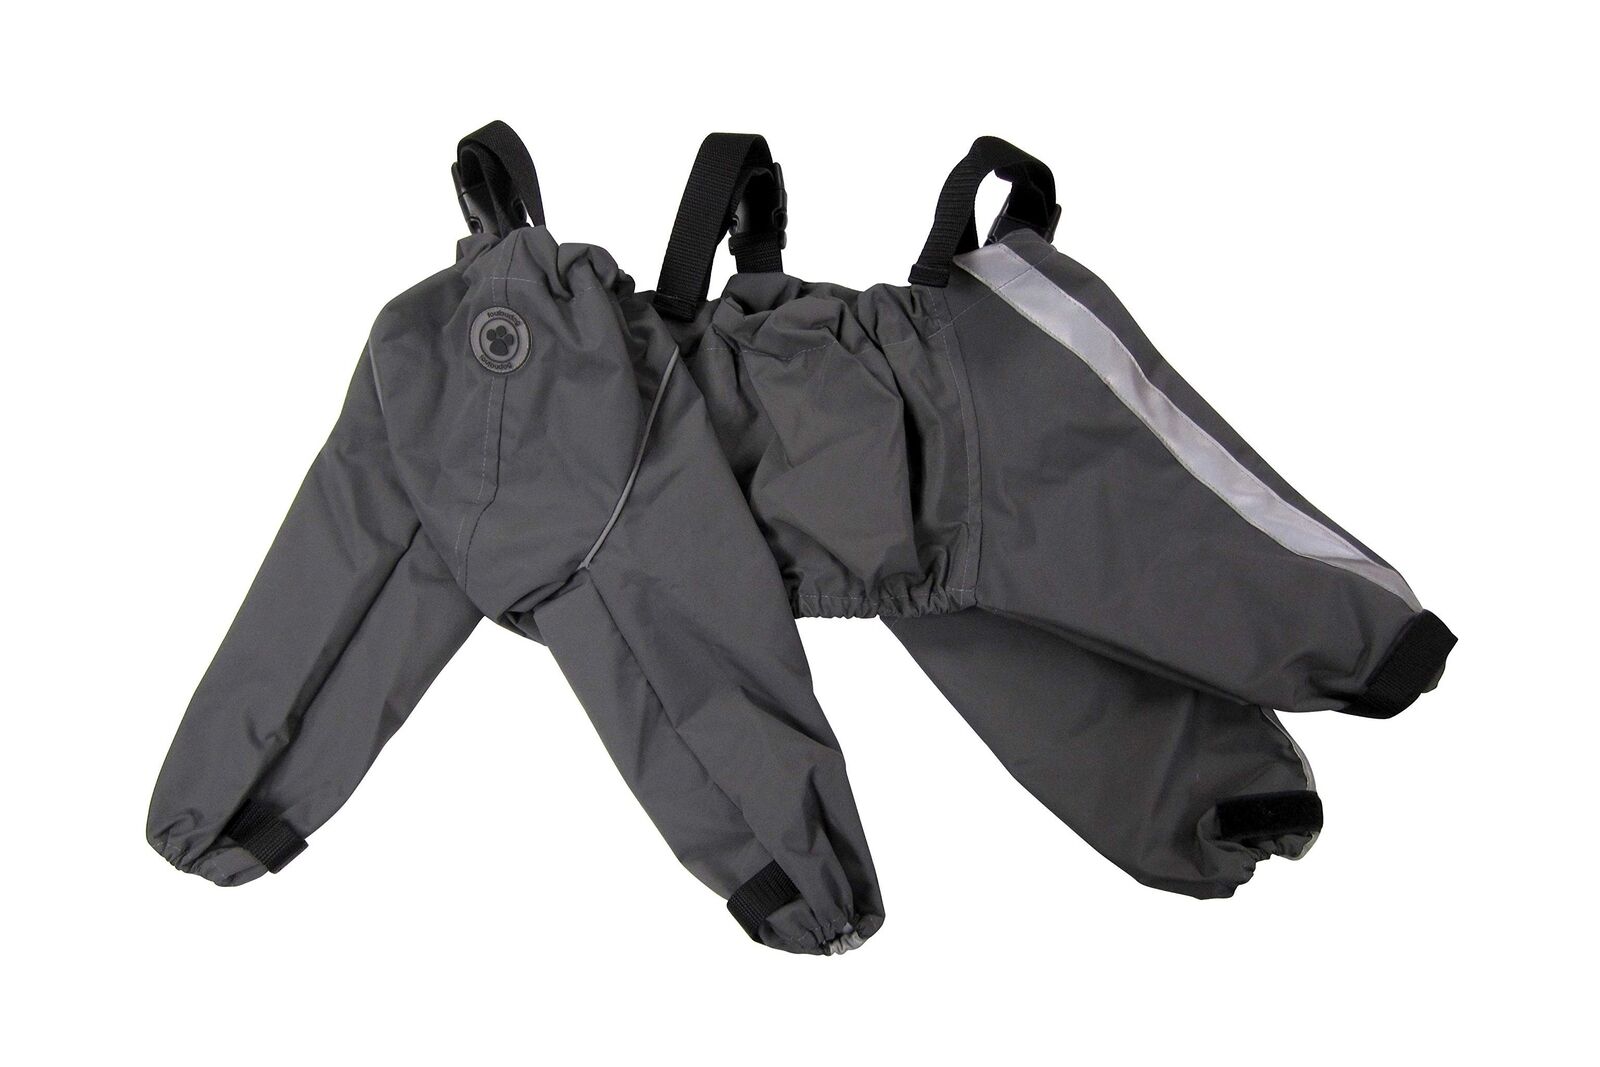 FouFou Dog 62561 Bodyguard Protective All-Weather Dog Pants, X-Large, Gray Grey